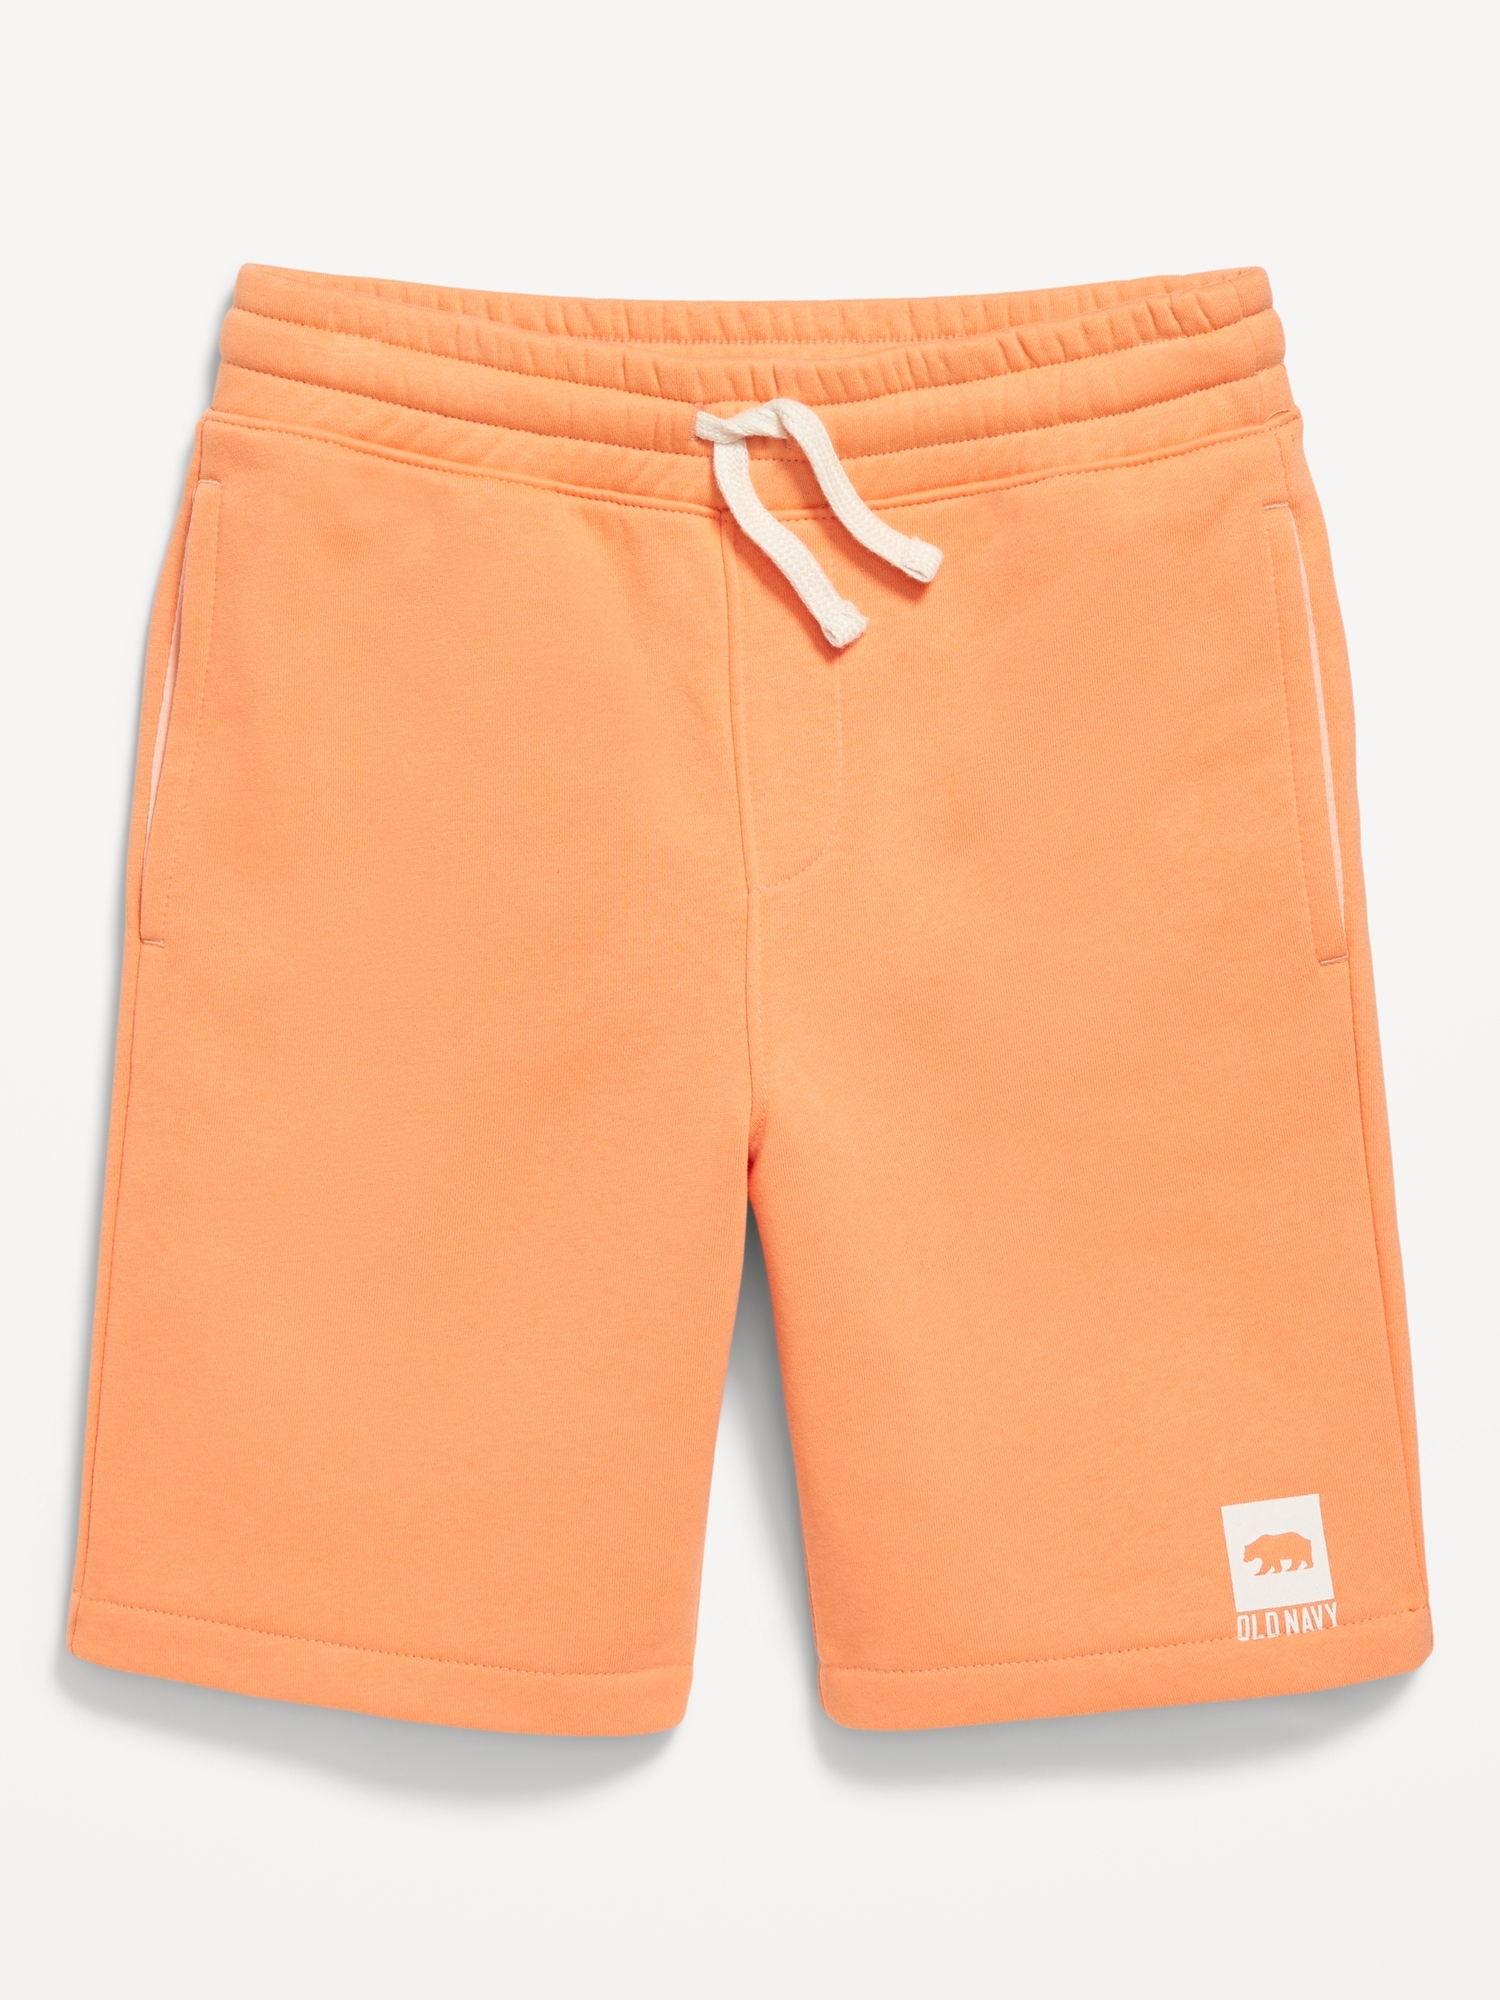 Fleece Logo-Graphic Jogger Shorts for Boys (At Knee) Hot Deal